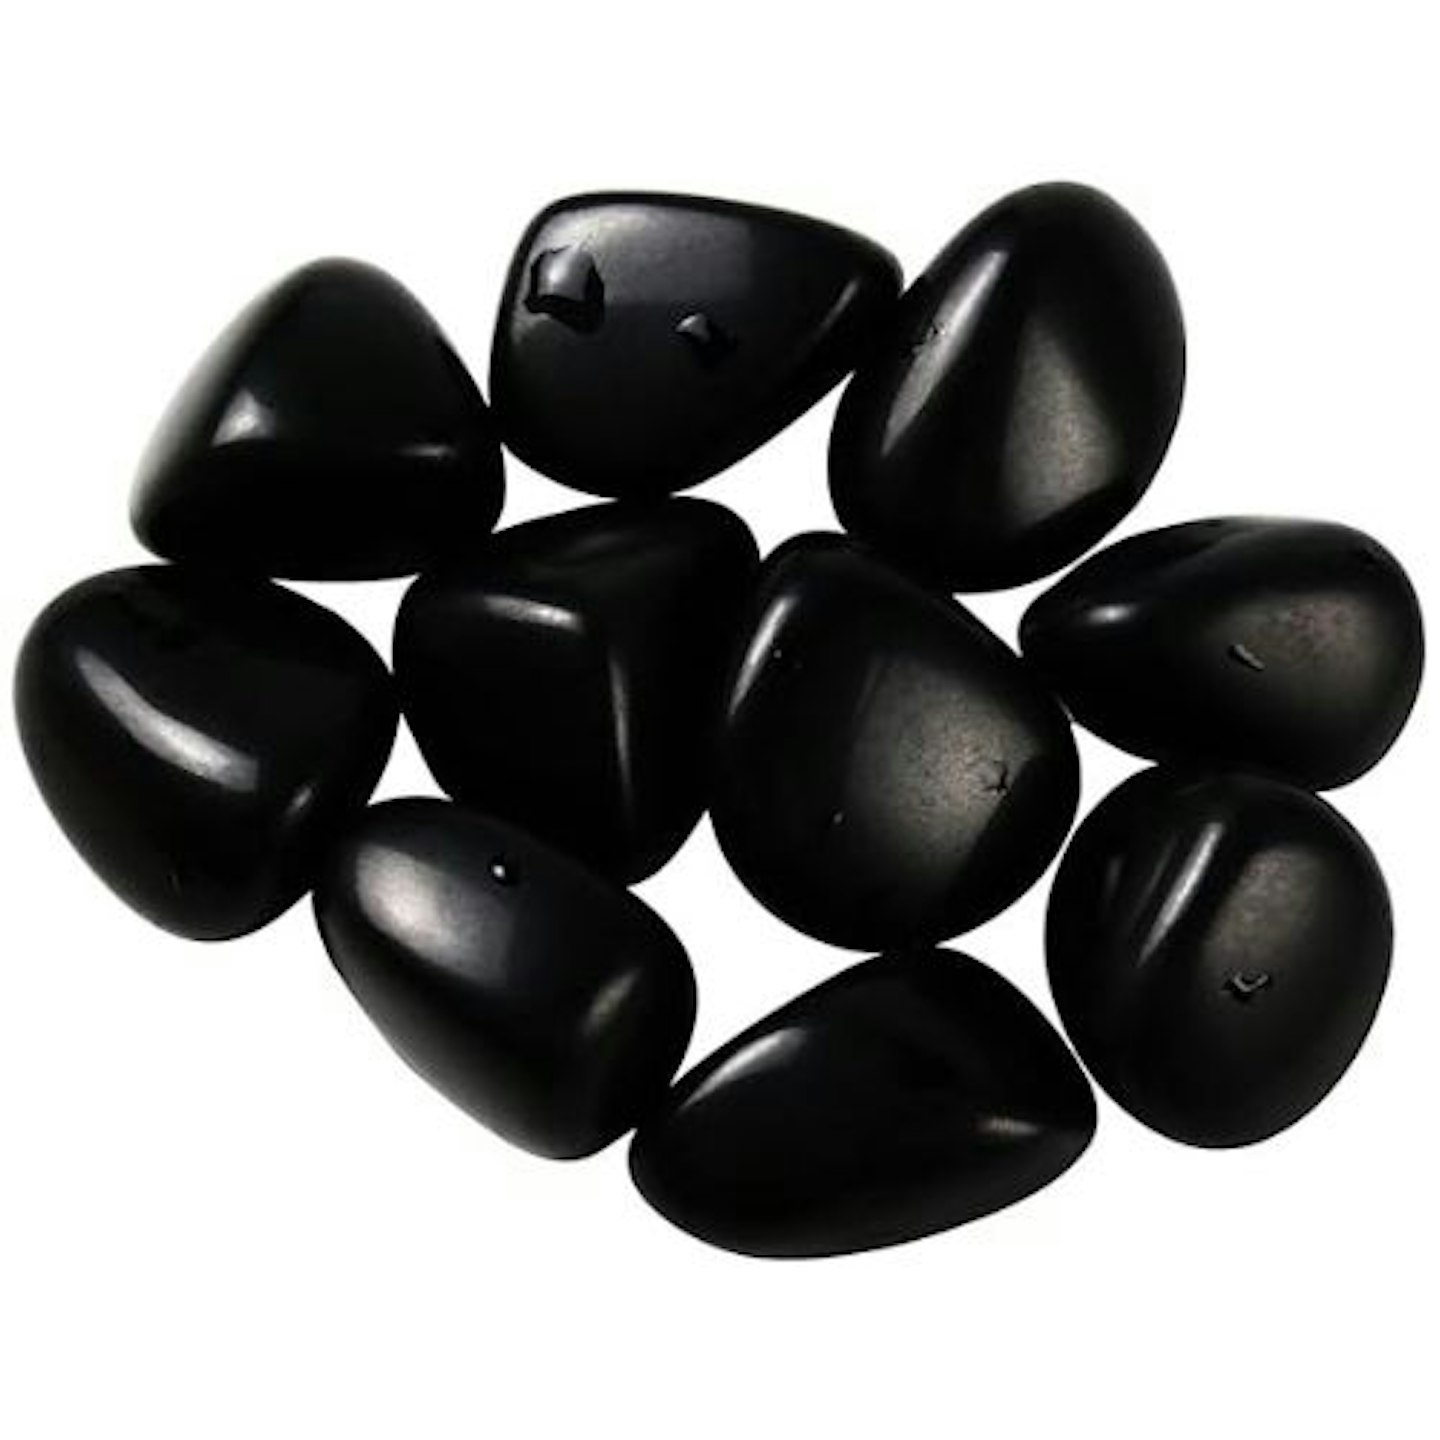 Nvzi Black Obsidian Crystal Rocks